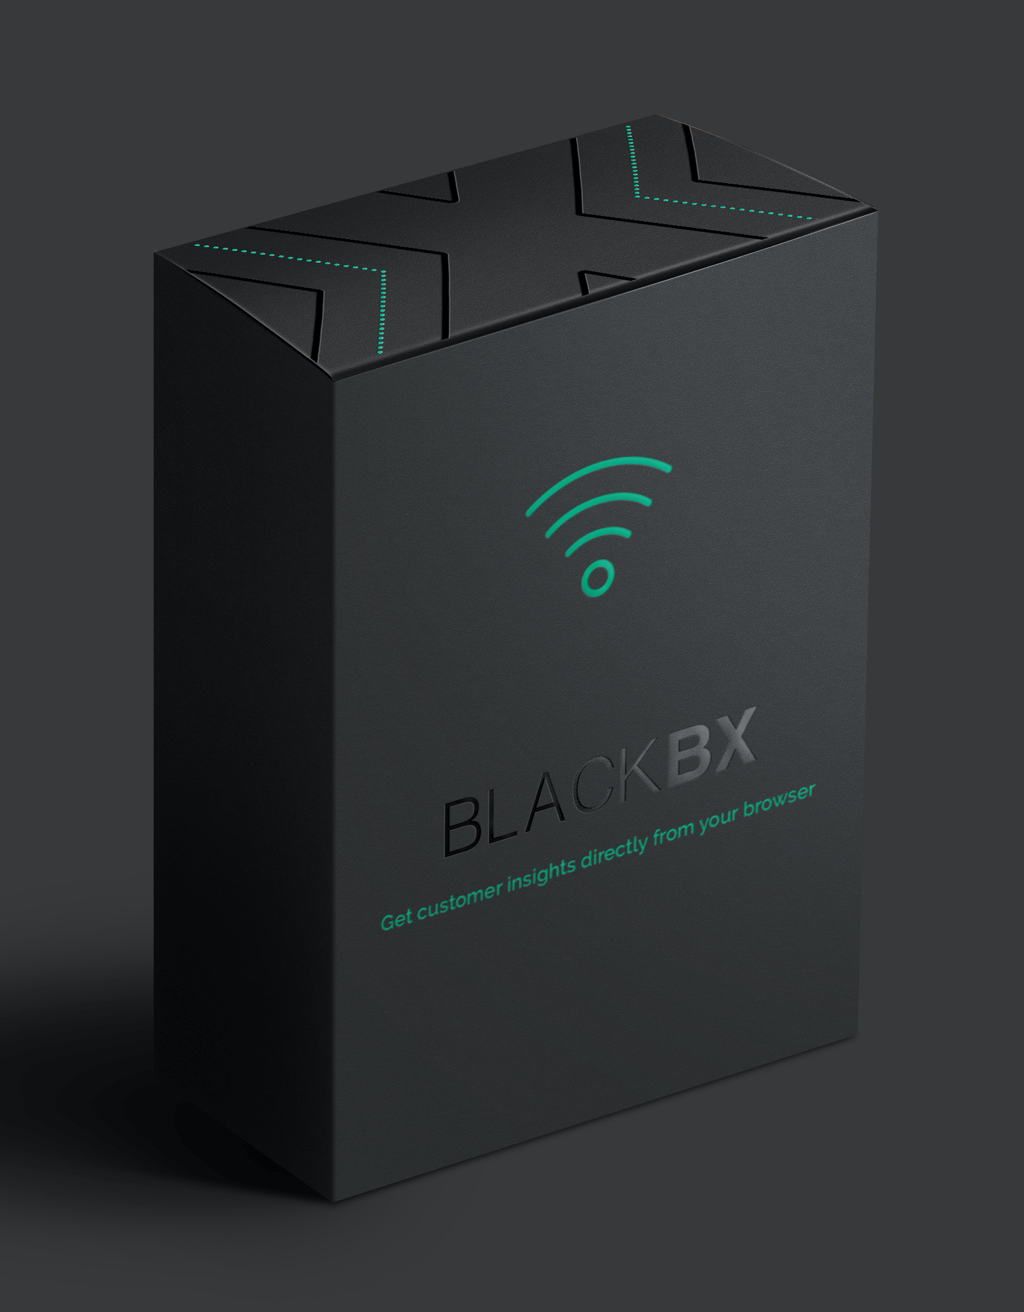 Branded packaging for the BlackBX black box device.